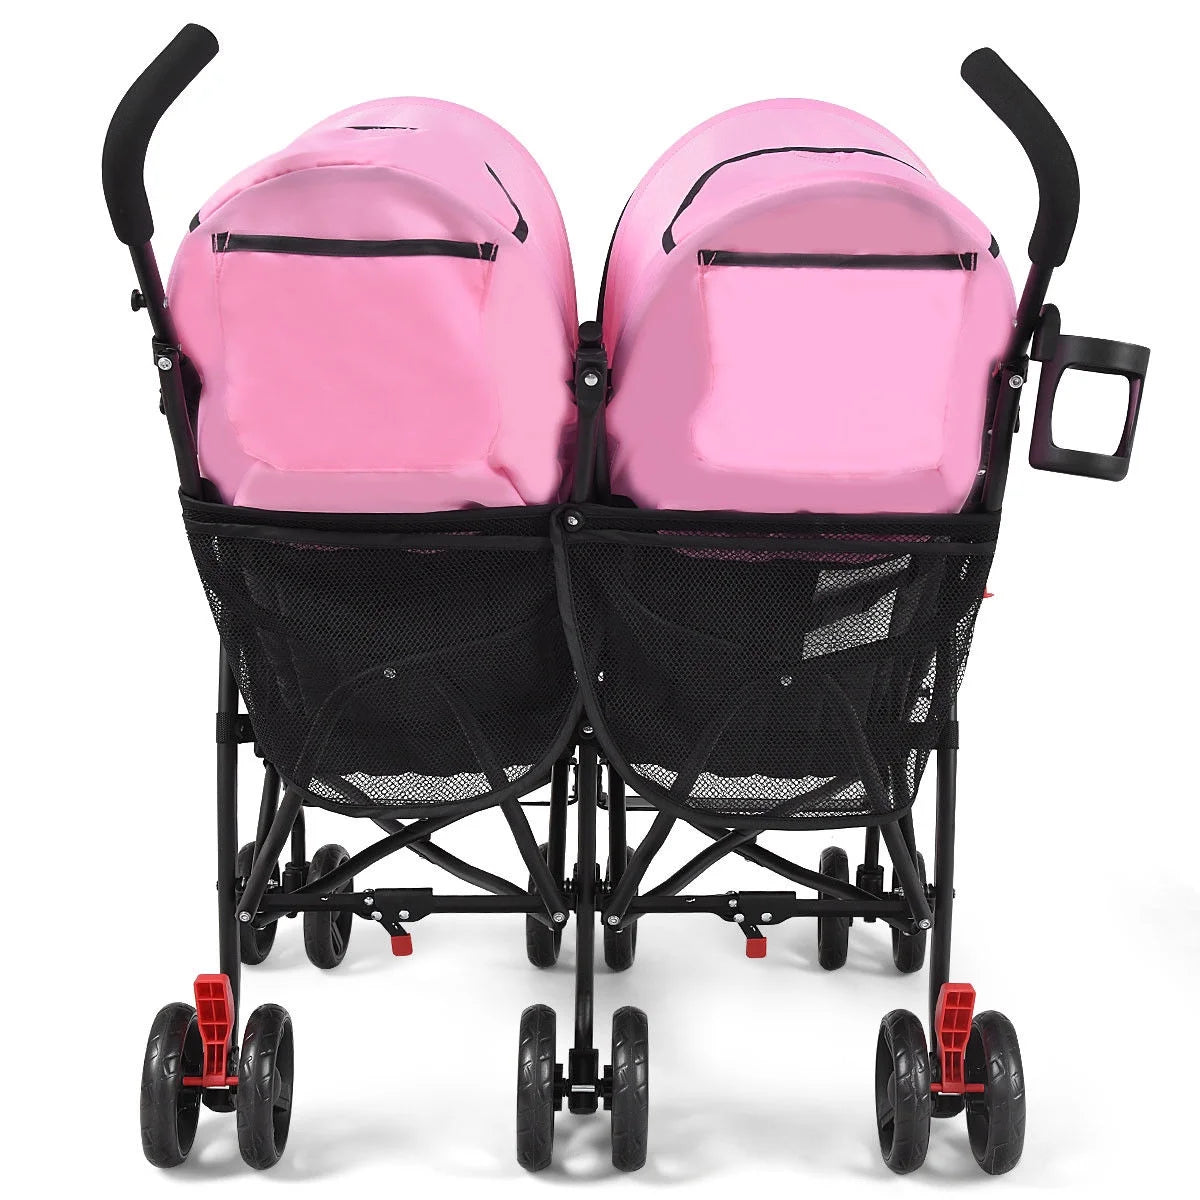 Baby-Joy Foldable Twin Baby Double Stroller Kids Ultralight Umbrella Stroller Pushchair Pink